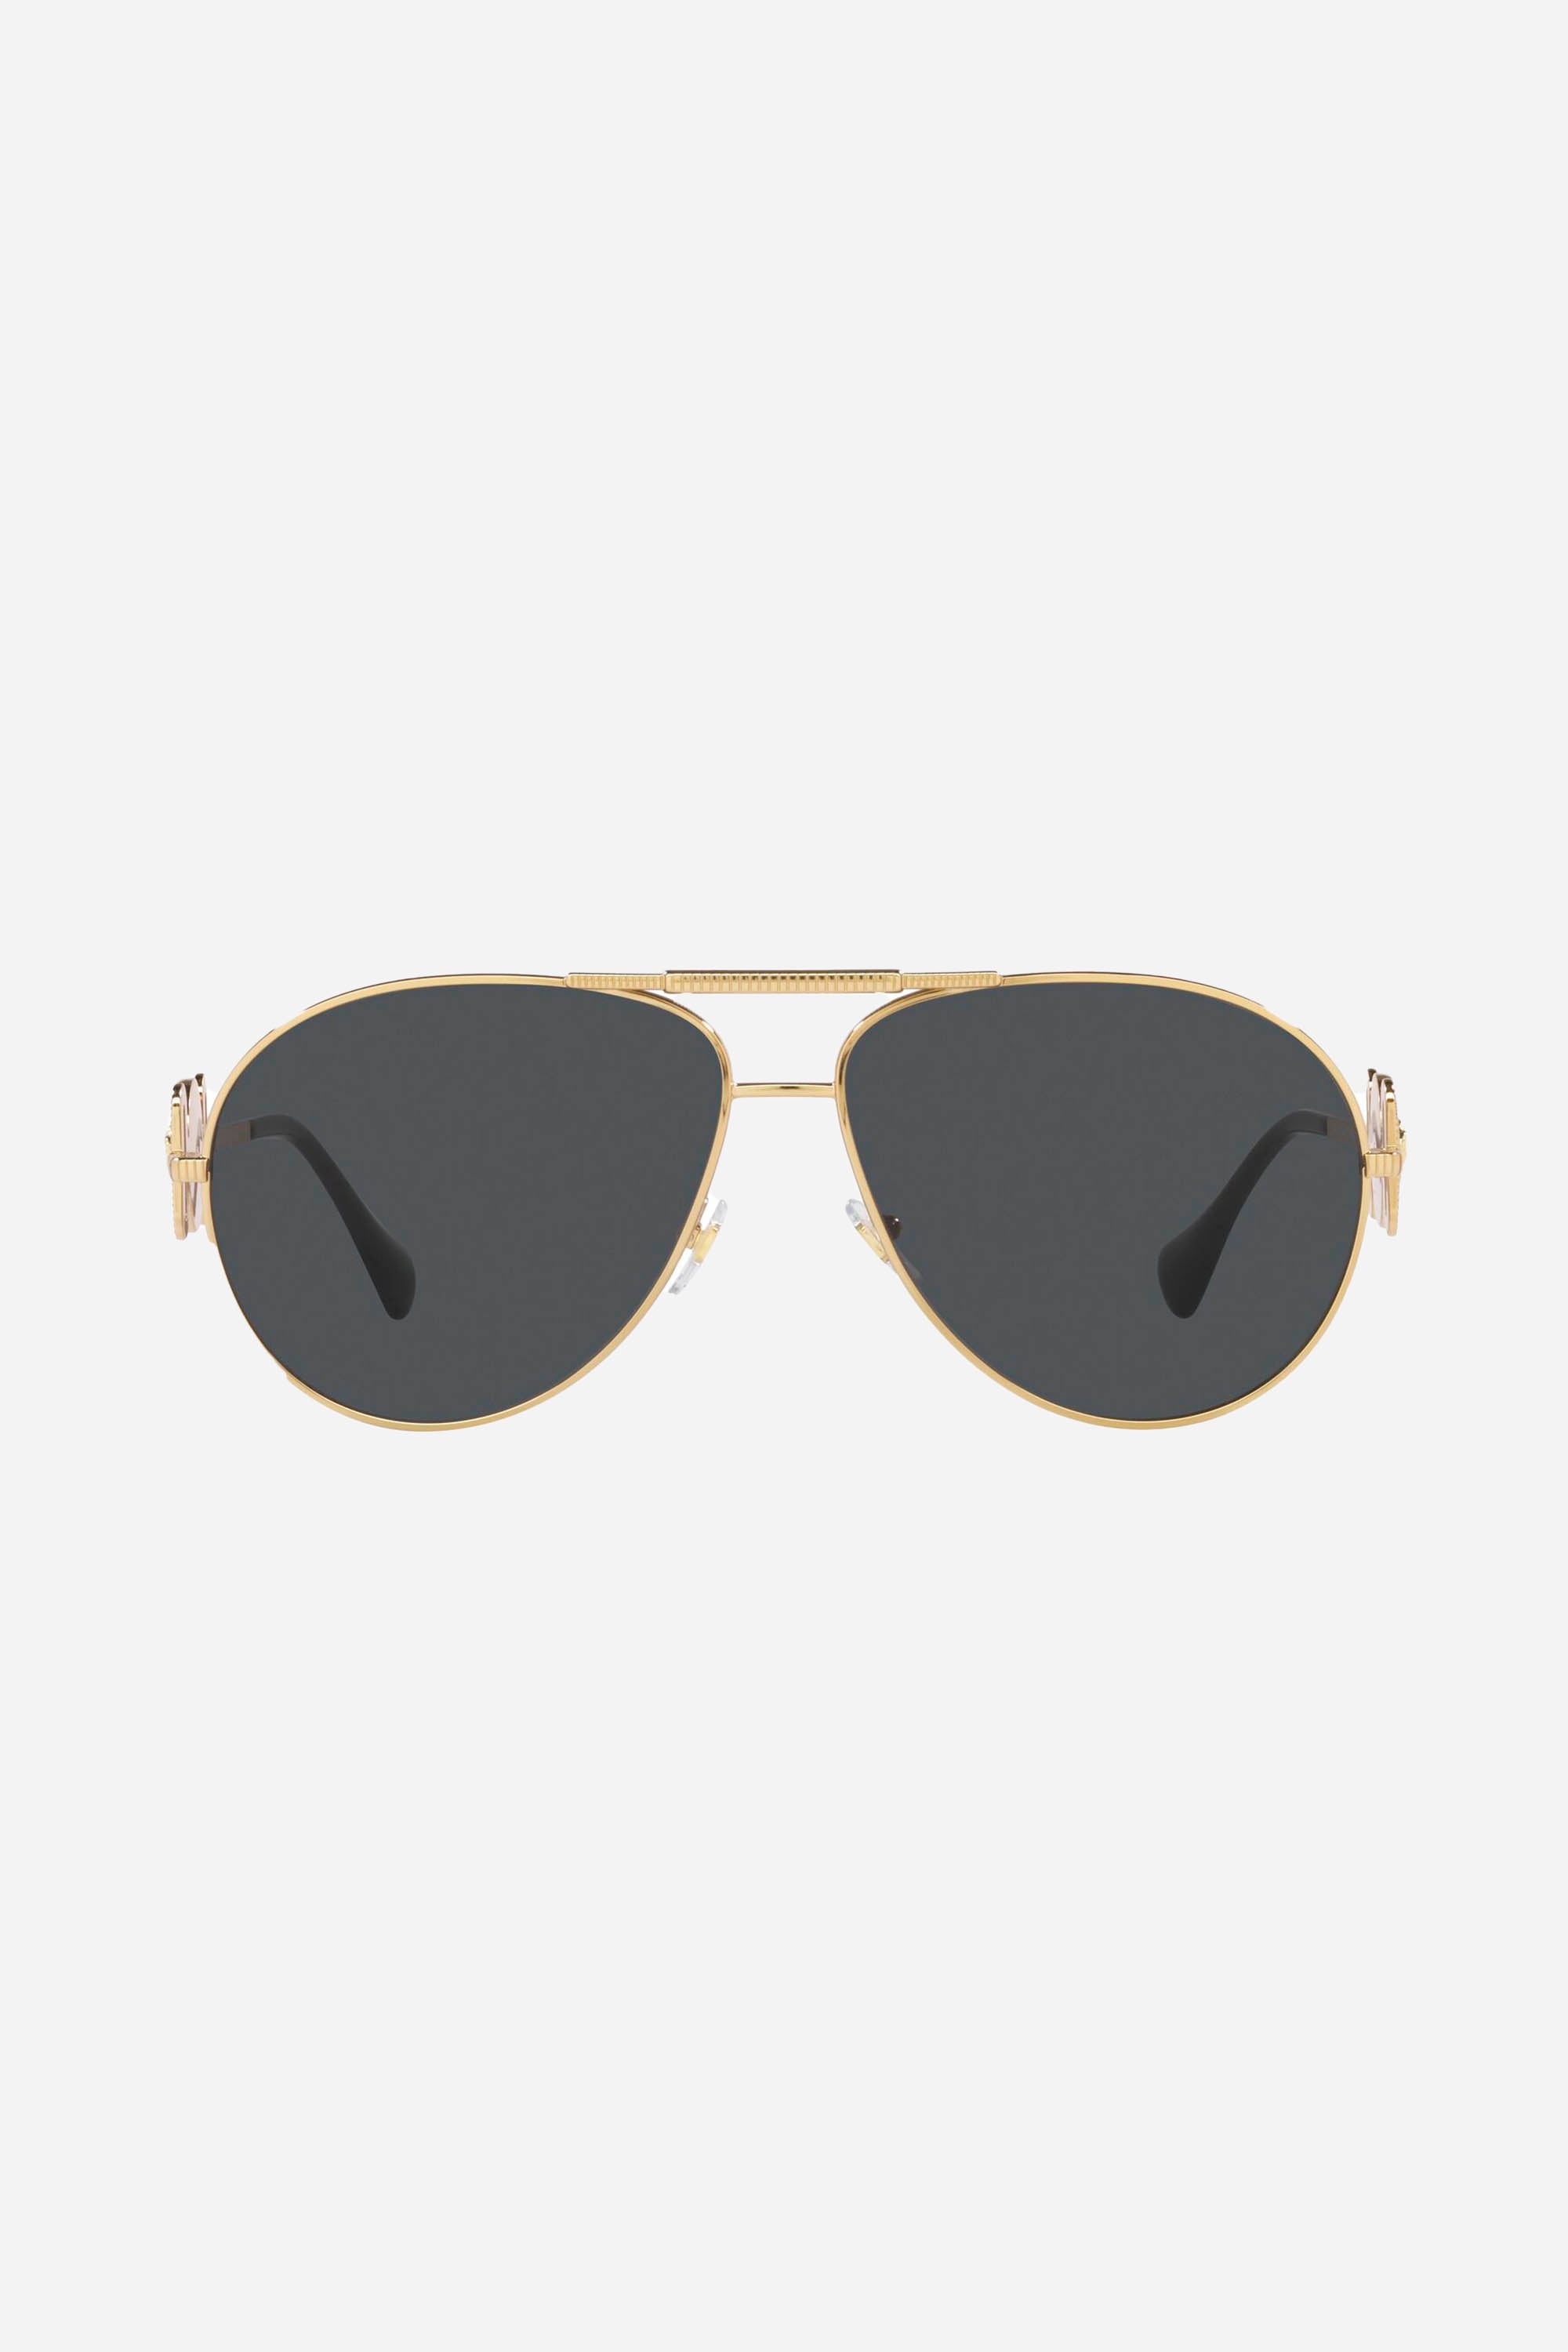 Versace caravan sunglasses with gold details - Eyewear Club